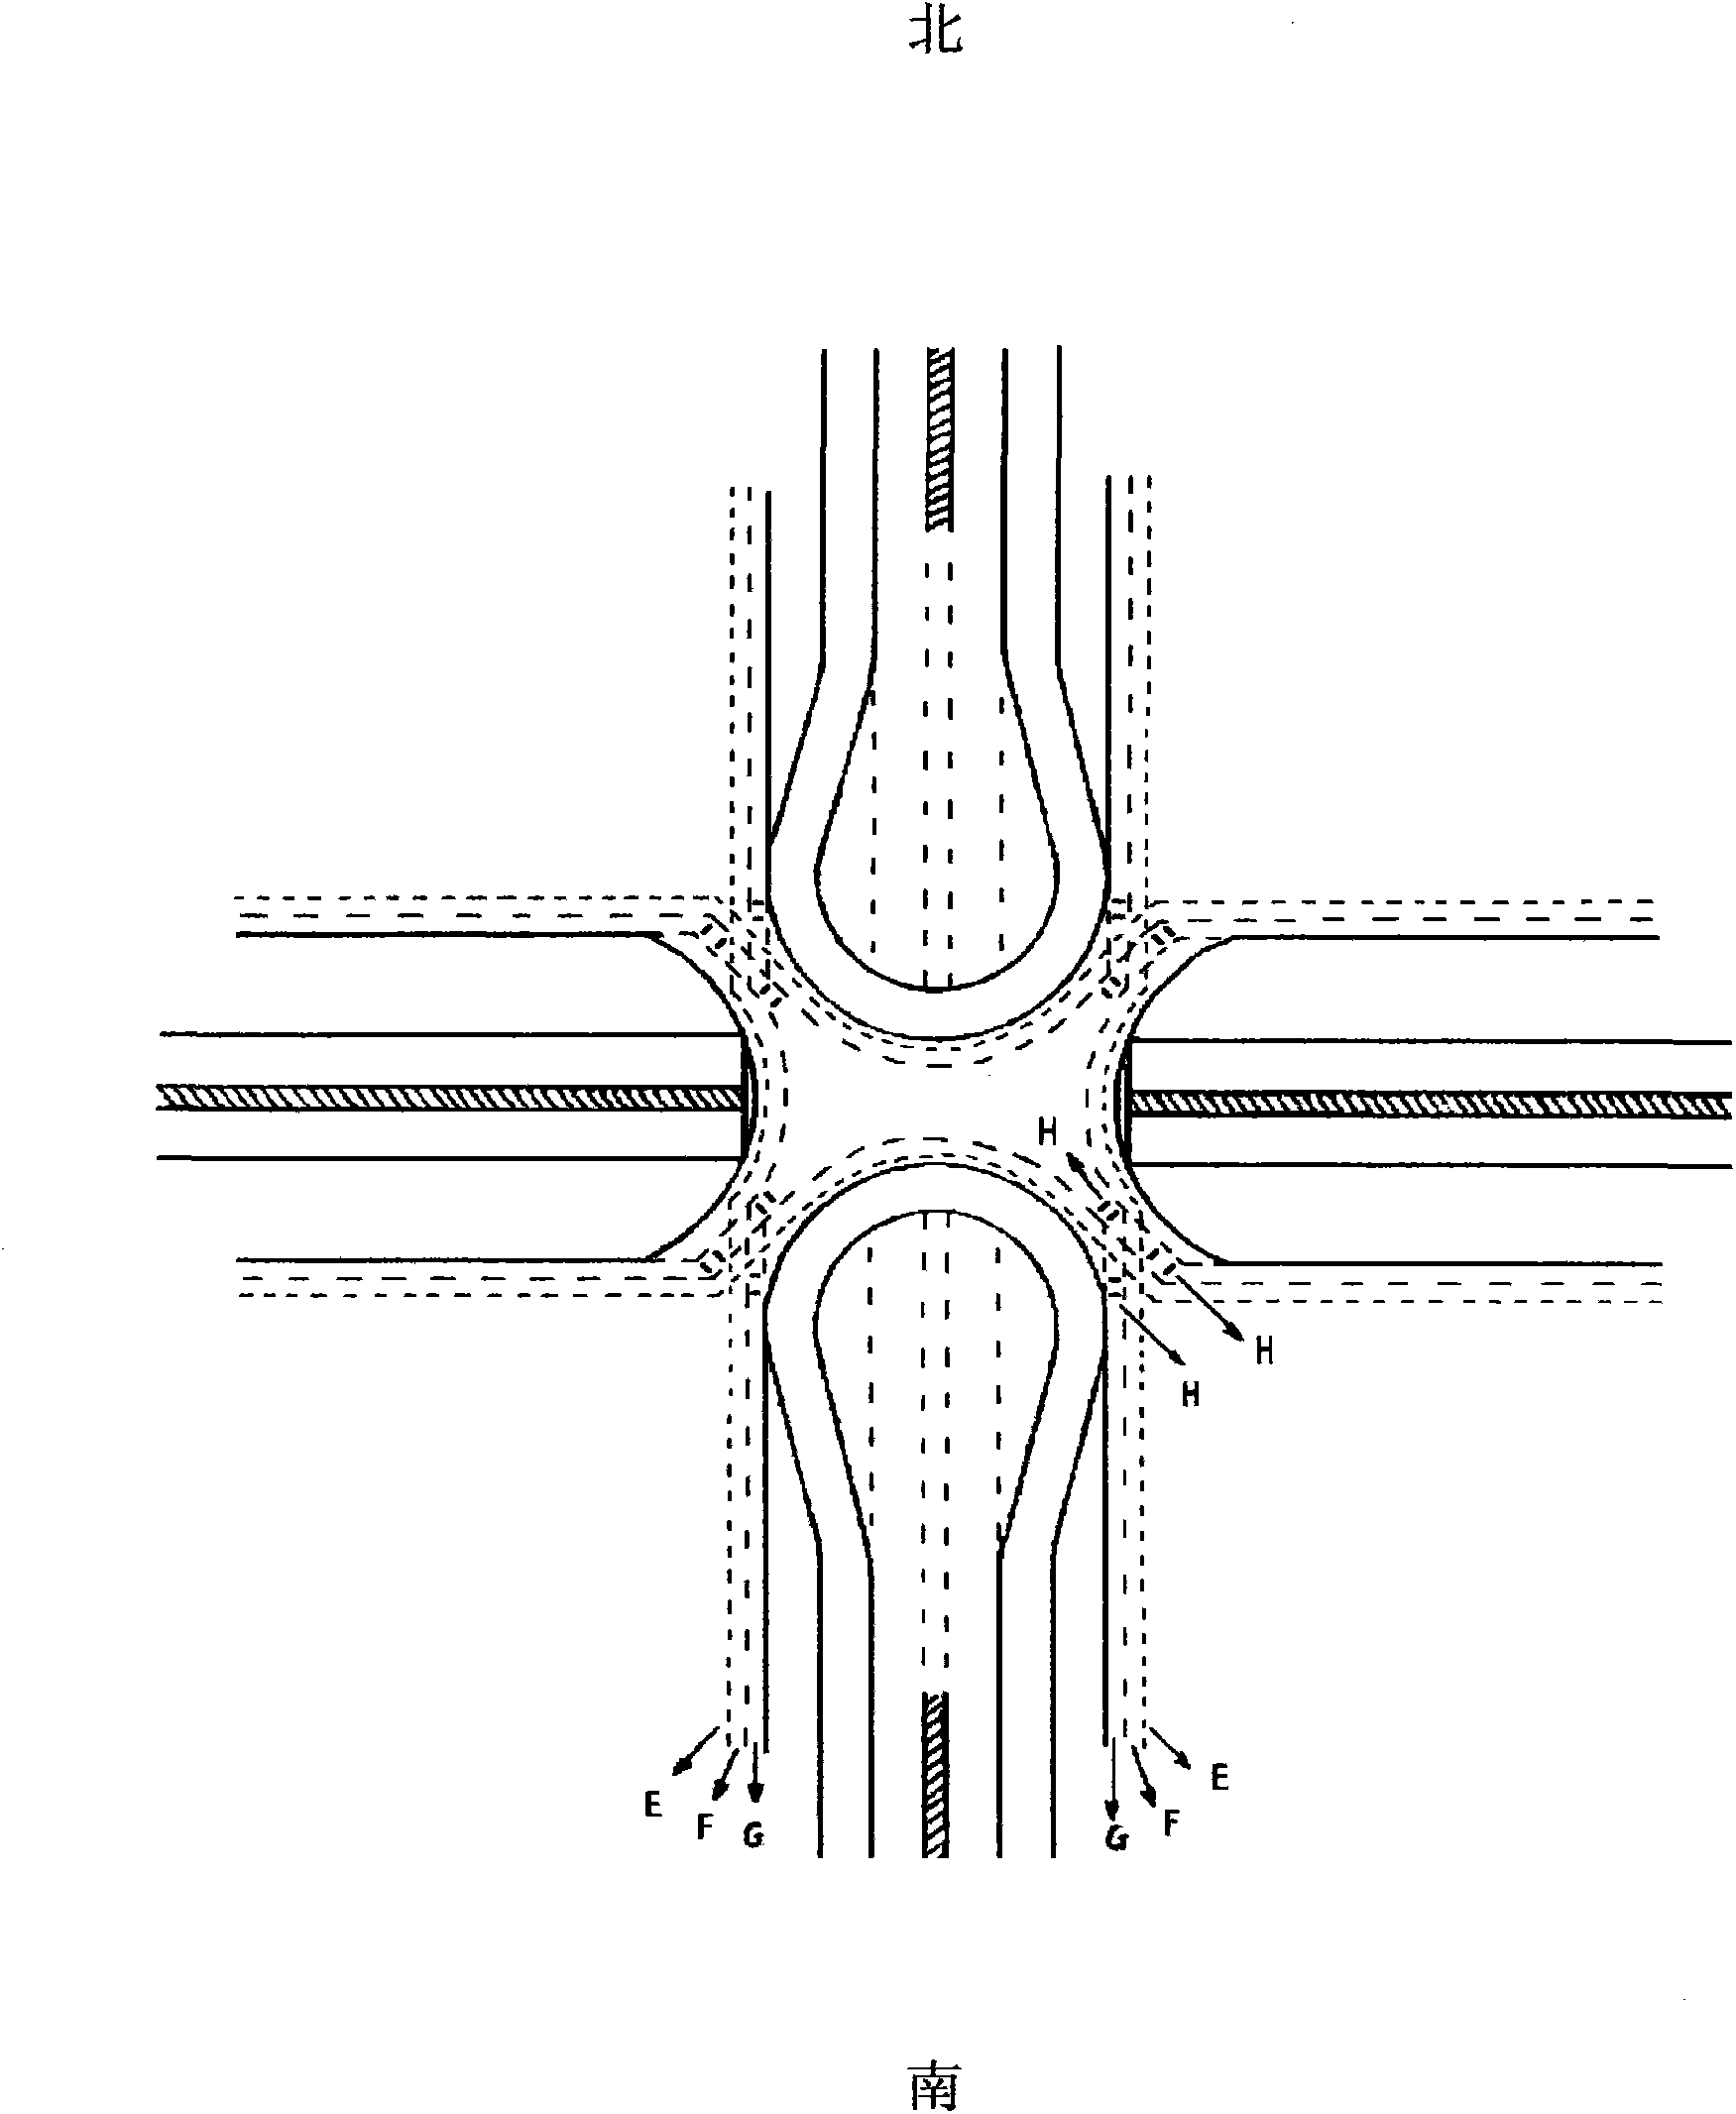 Symmetrical type full-interchange cross overpass with pedestrian-vehicle separation